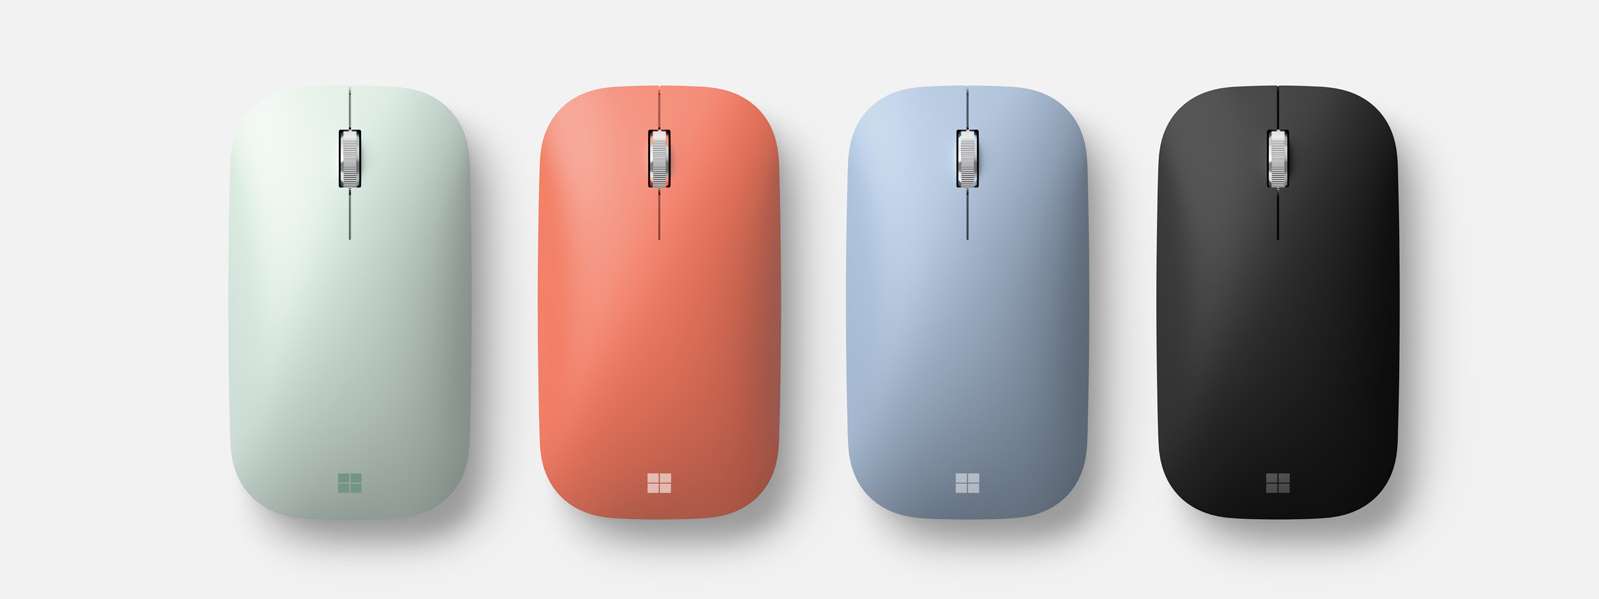 Microsoft Bluetooth Mouse (Peach) KTF-00044